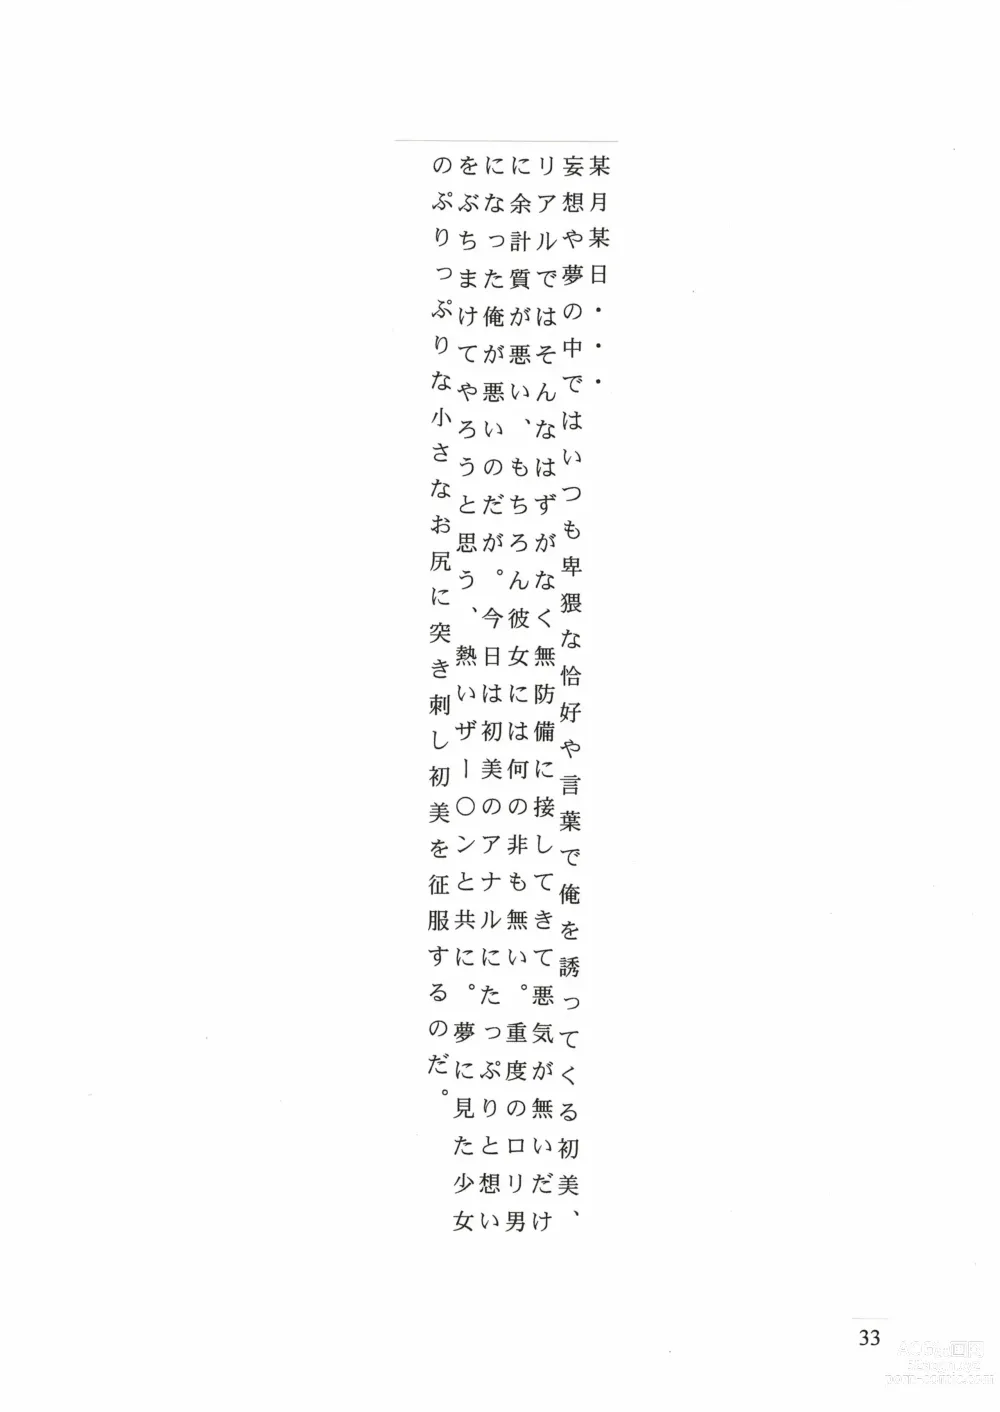 Page 35 of doujinshi Rinkaiten